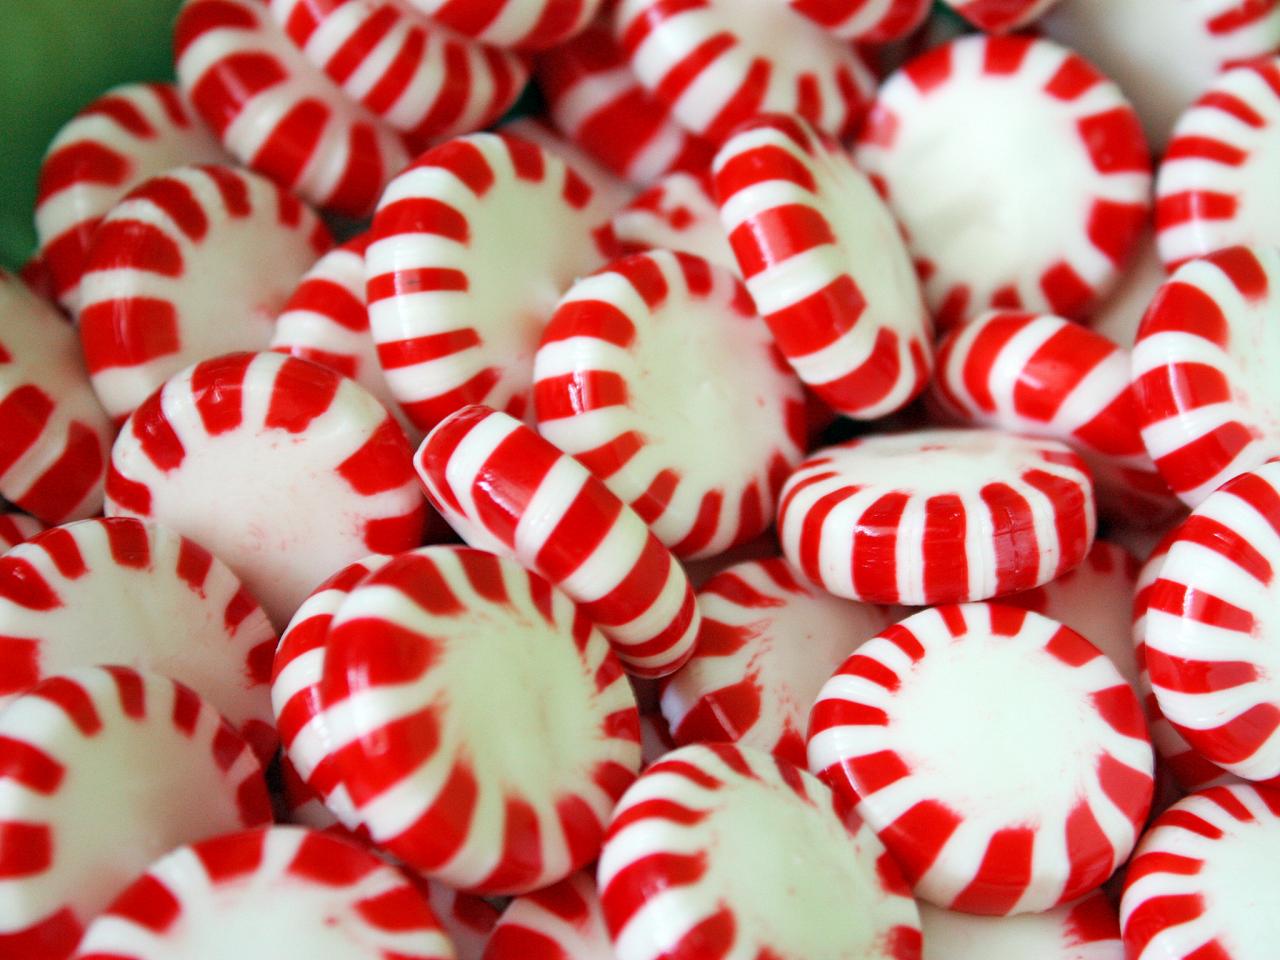 original_Myra-Hope-peppermint-candy-wreath-step-one_s4s3.jpg.rend.hgtvcom.1280.960.jpeg